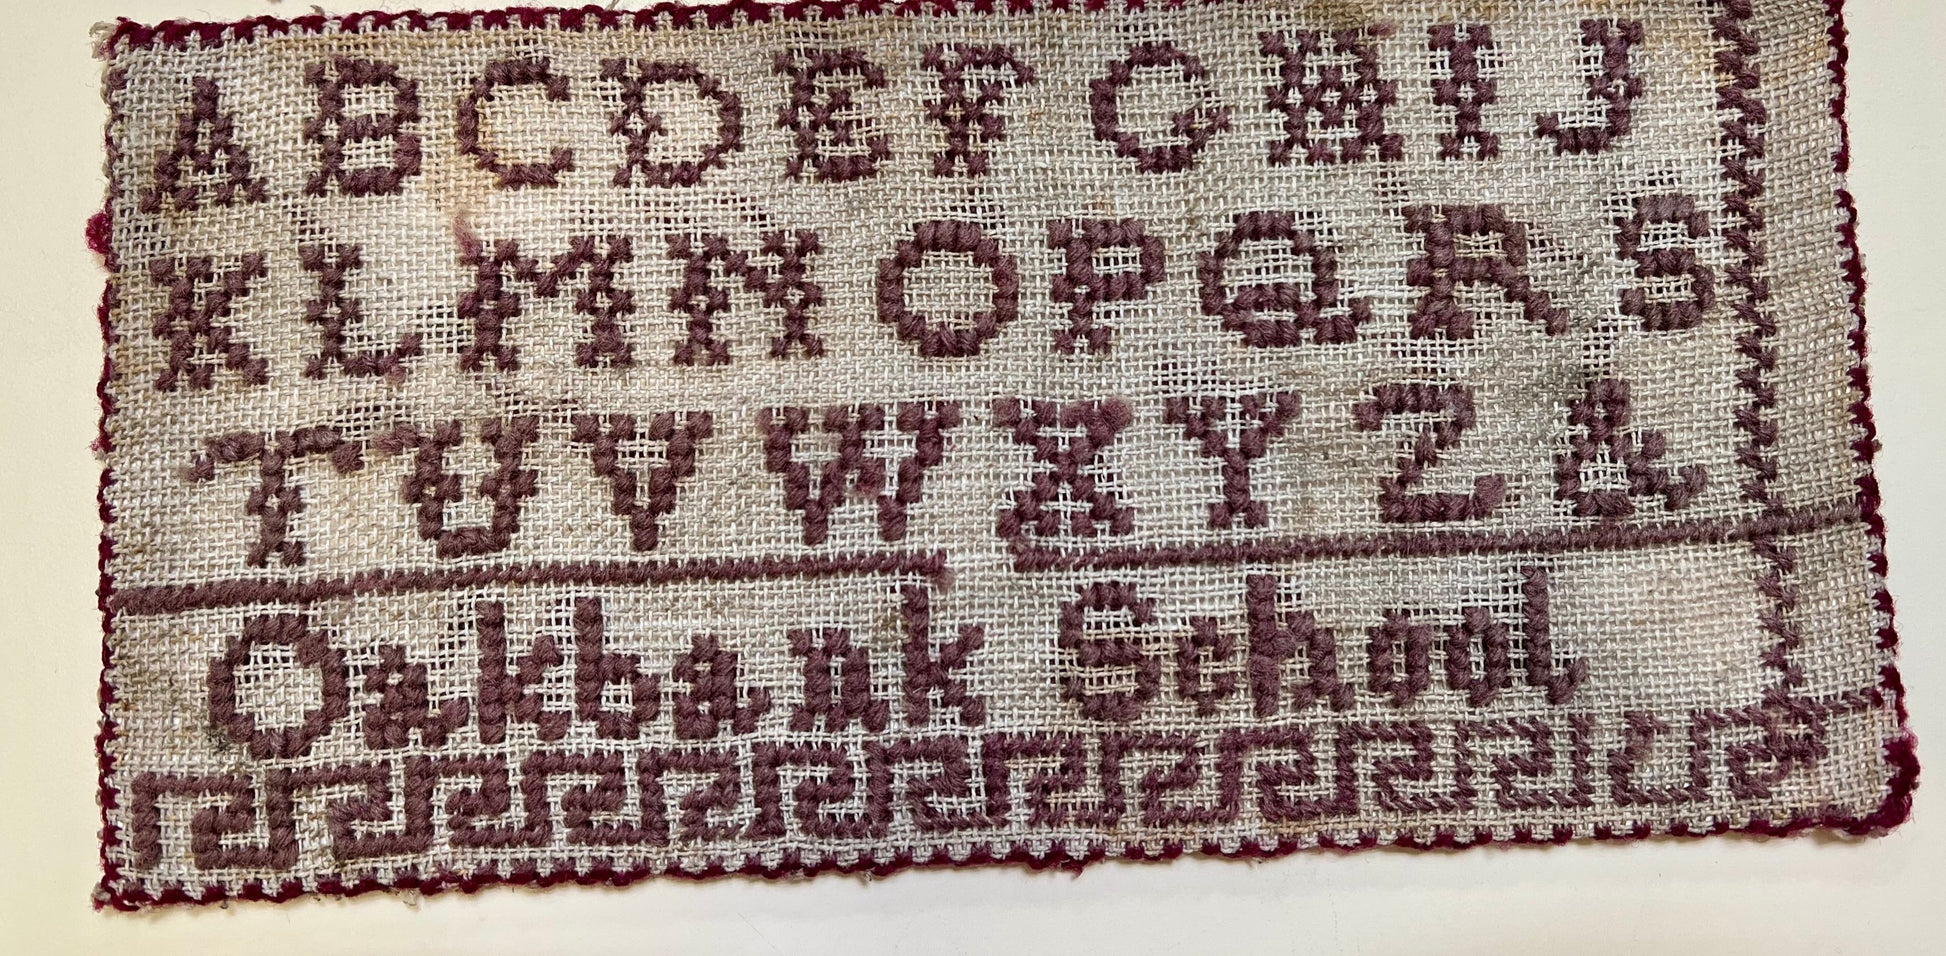 Vintage French Alphabet Embroidery Album Repro Cross Stitch Kit